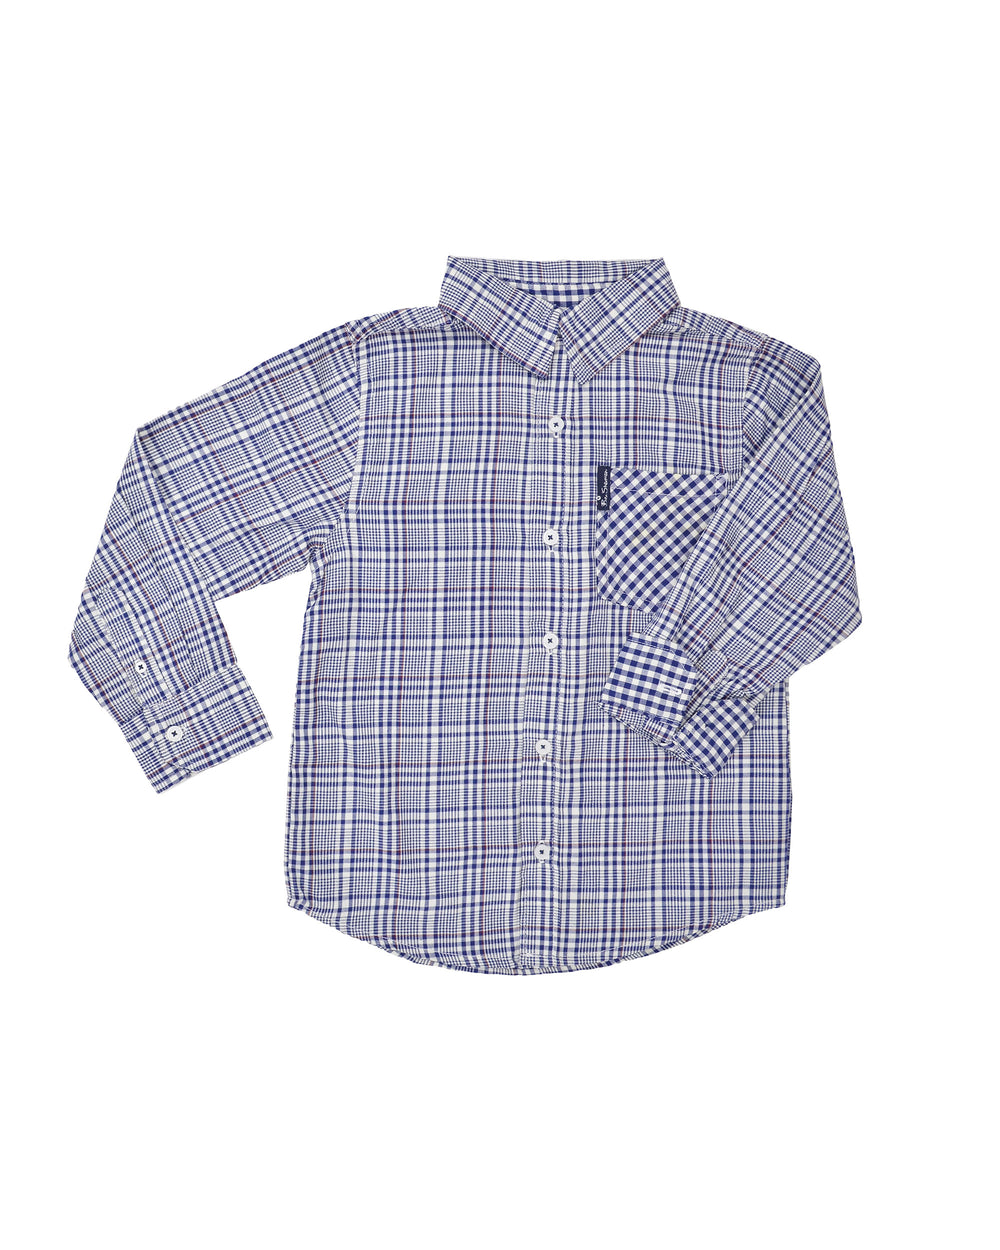 Boys' Blue Plaid & Gingham Yarn Dyed Shirt (Sizes 4-7)